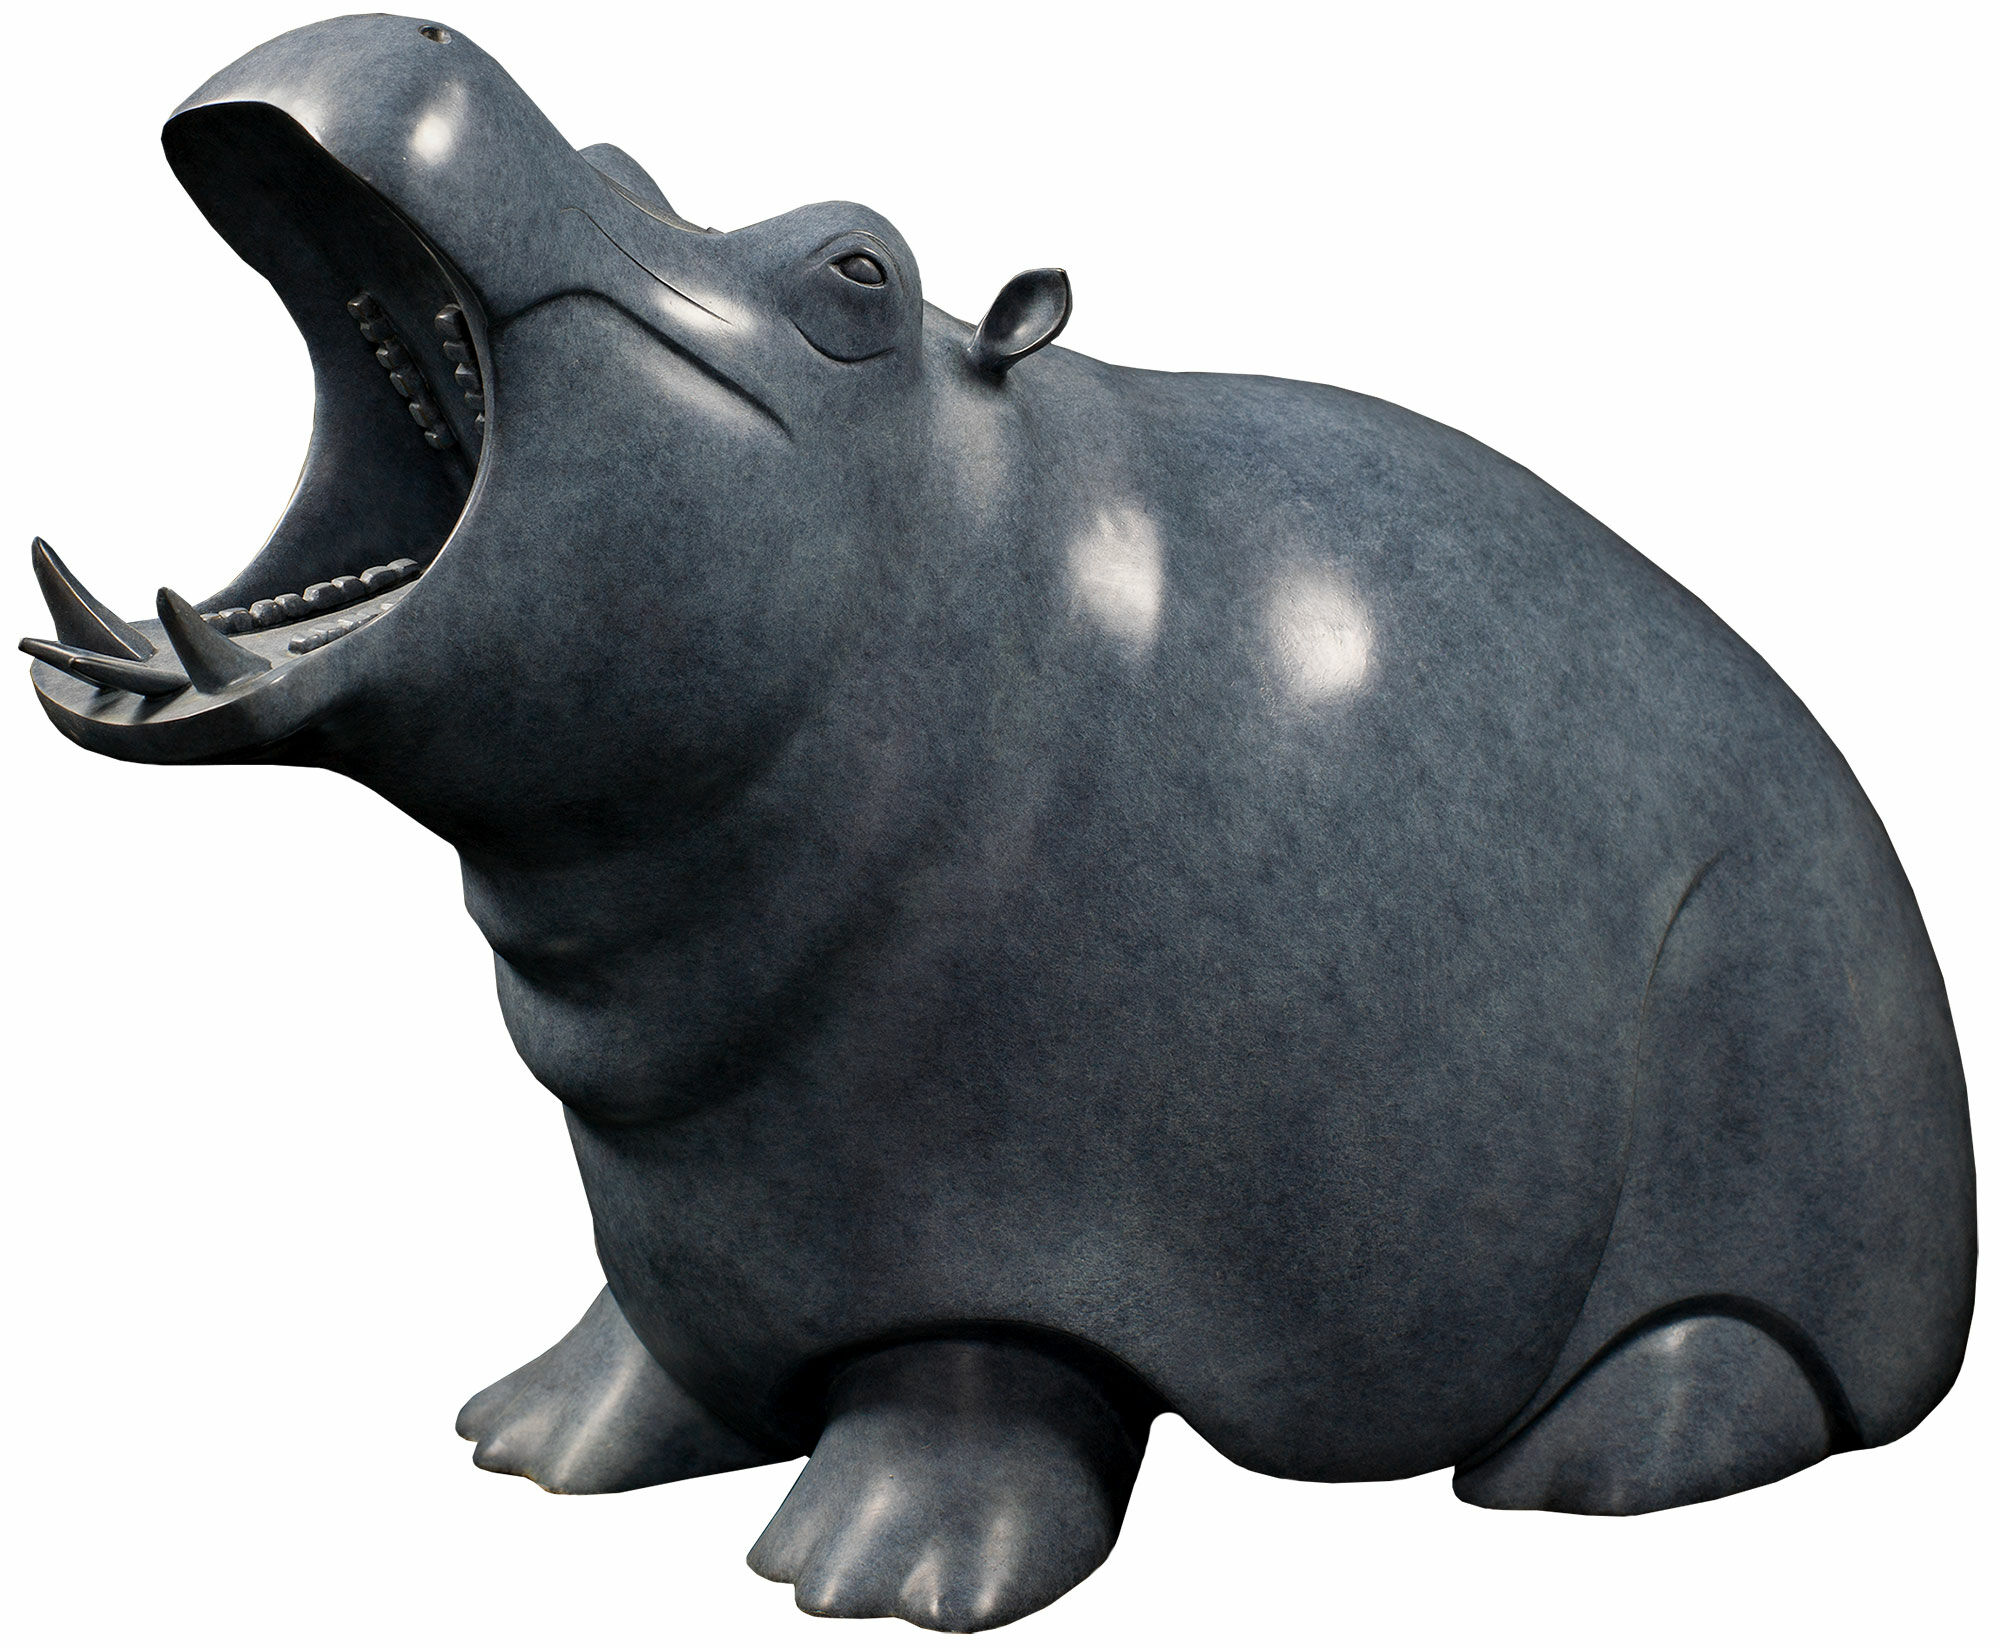 Sculpture "Hippo", bronze grey/black by Evert den Hartog